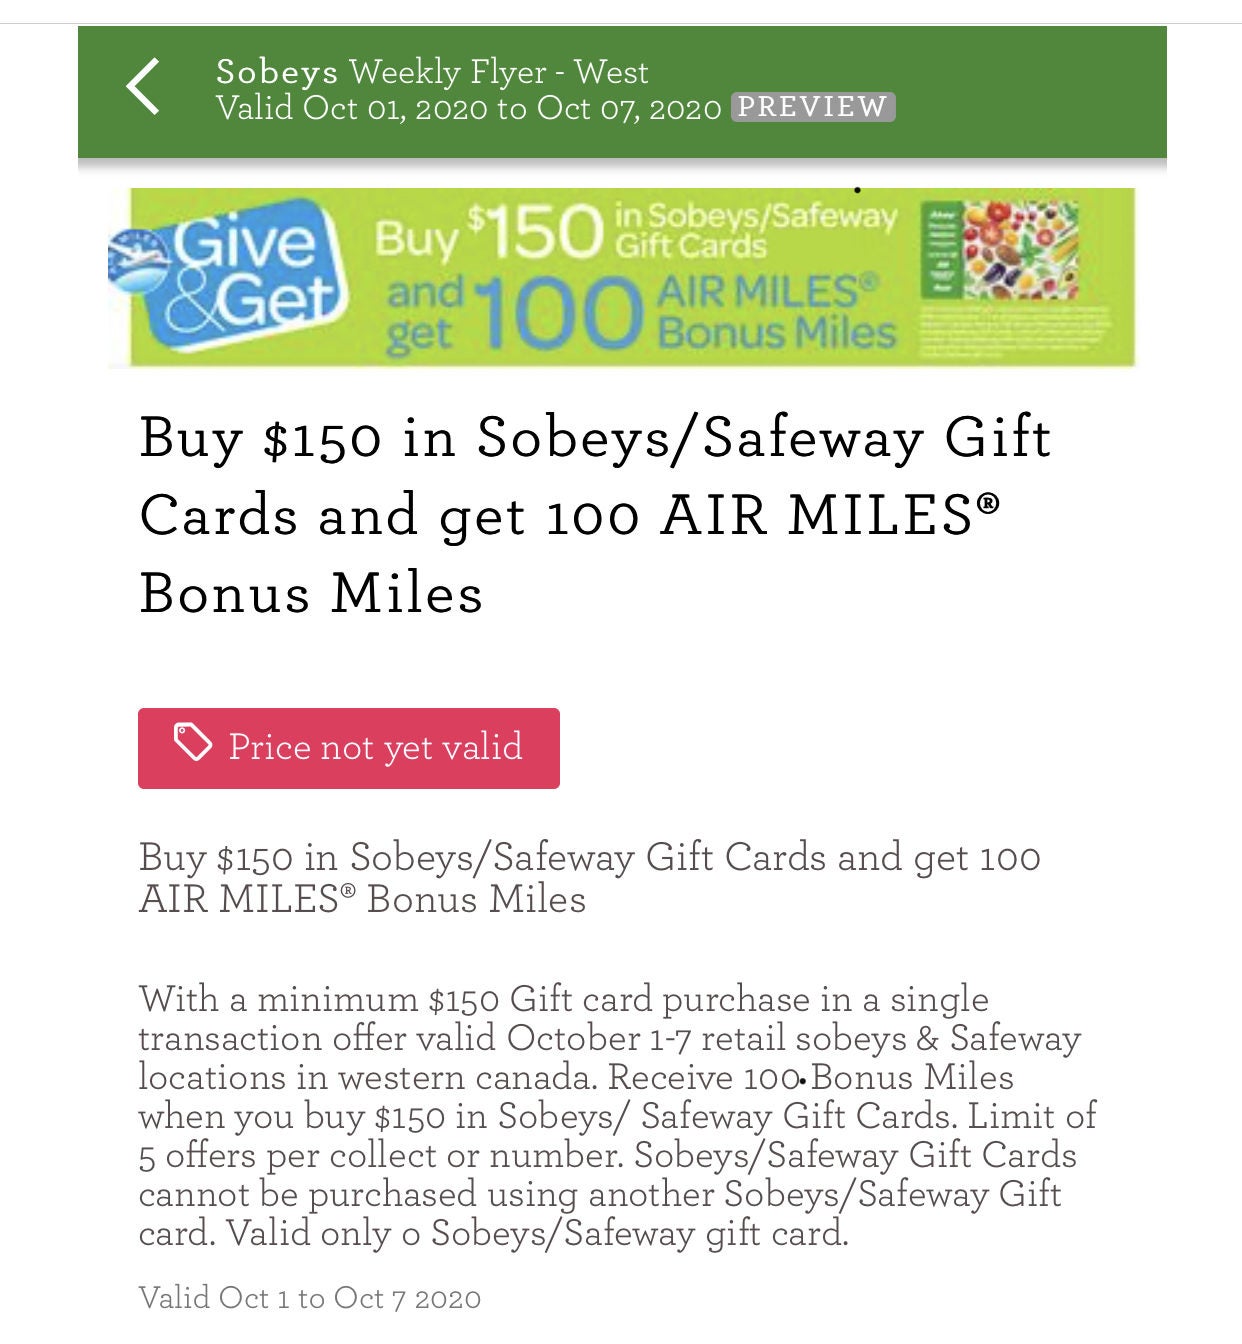 [Sobeys] Buy 150 in Sobeys gift cards, get 100 Air Miles